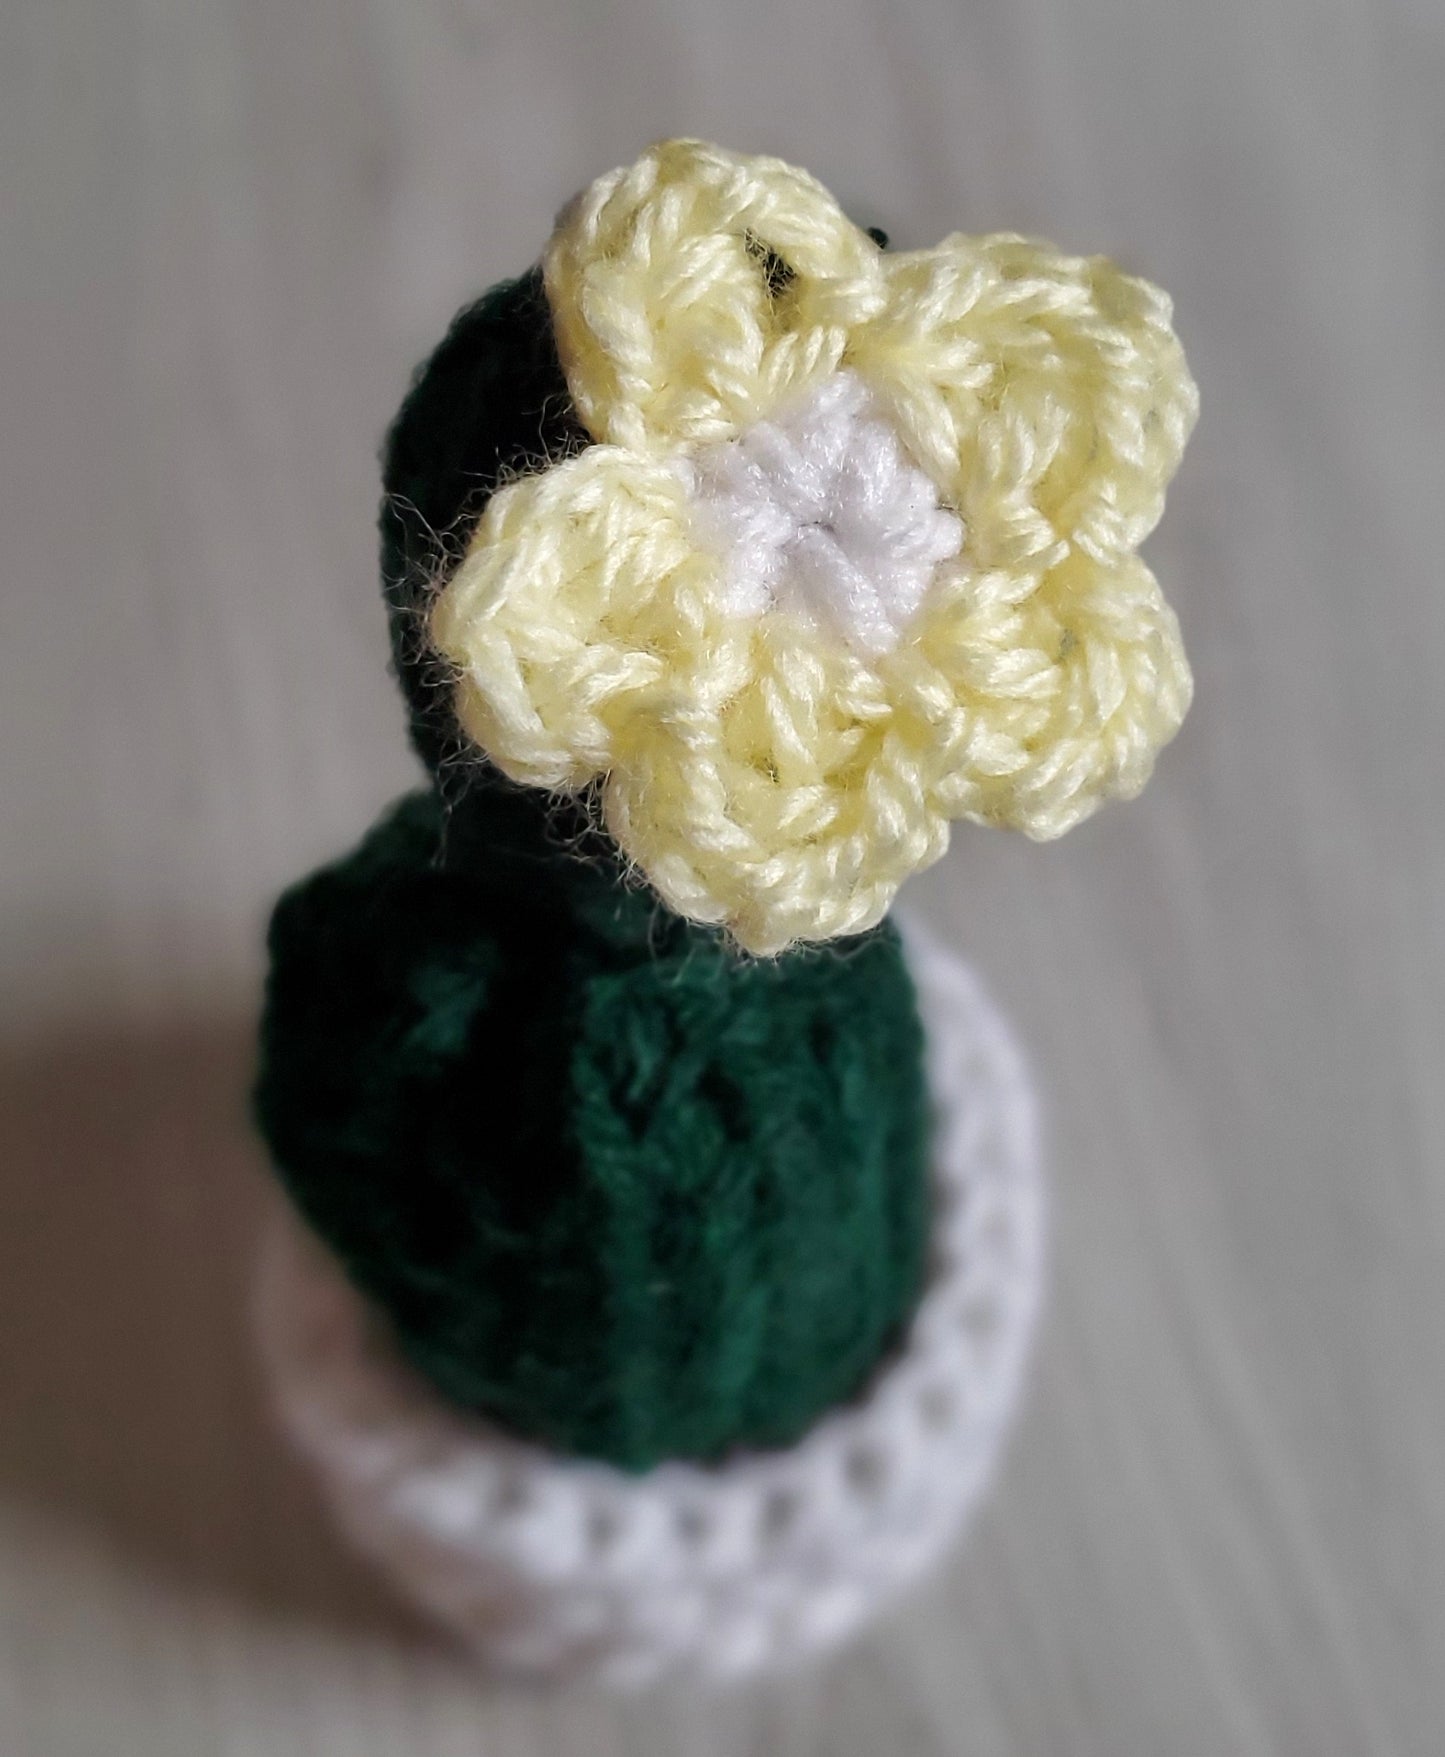 Crochet Barrel Cactus